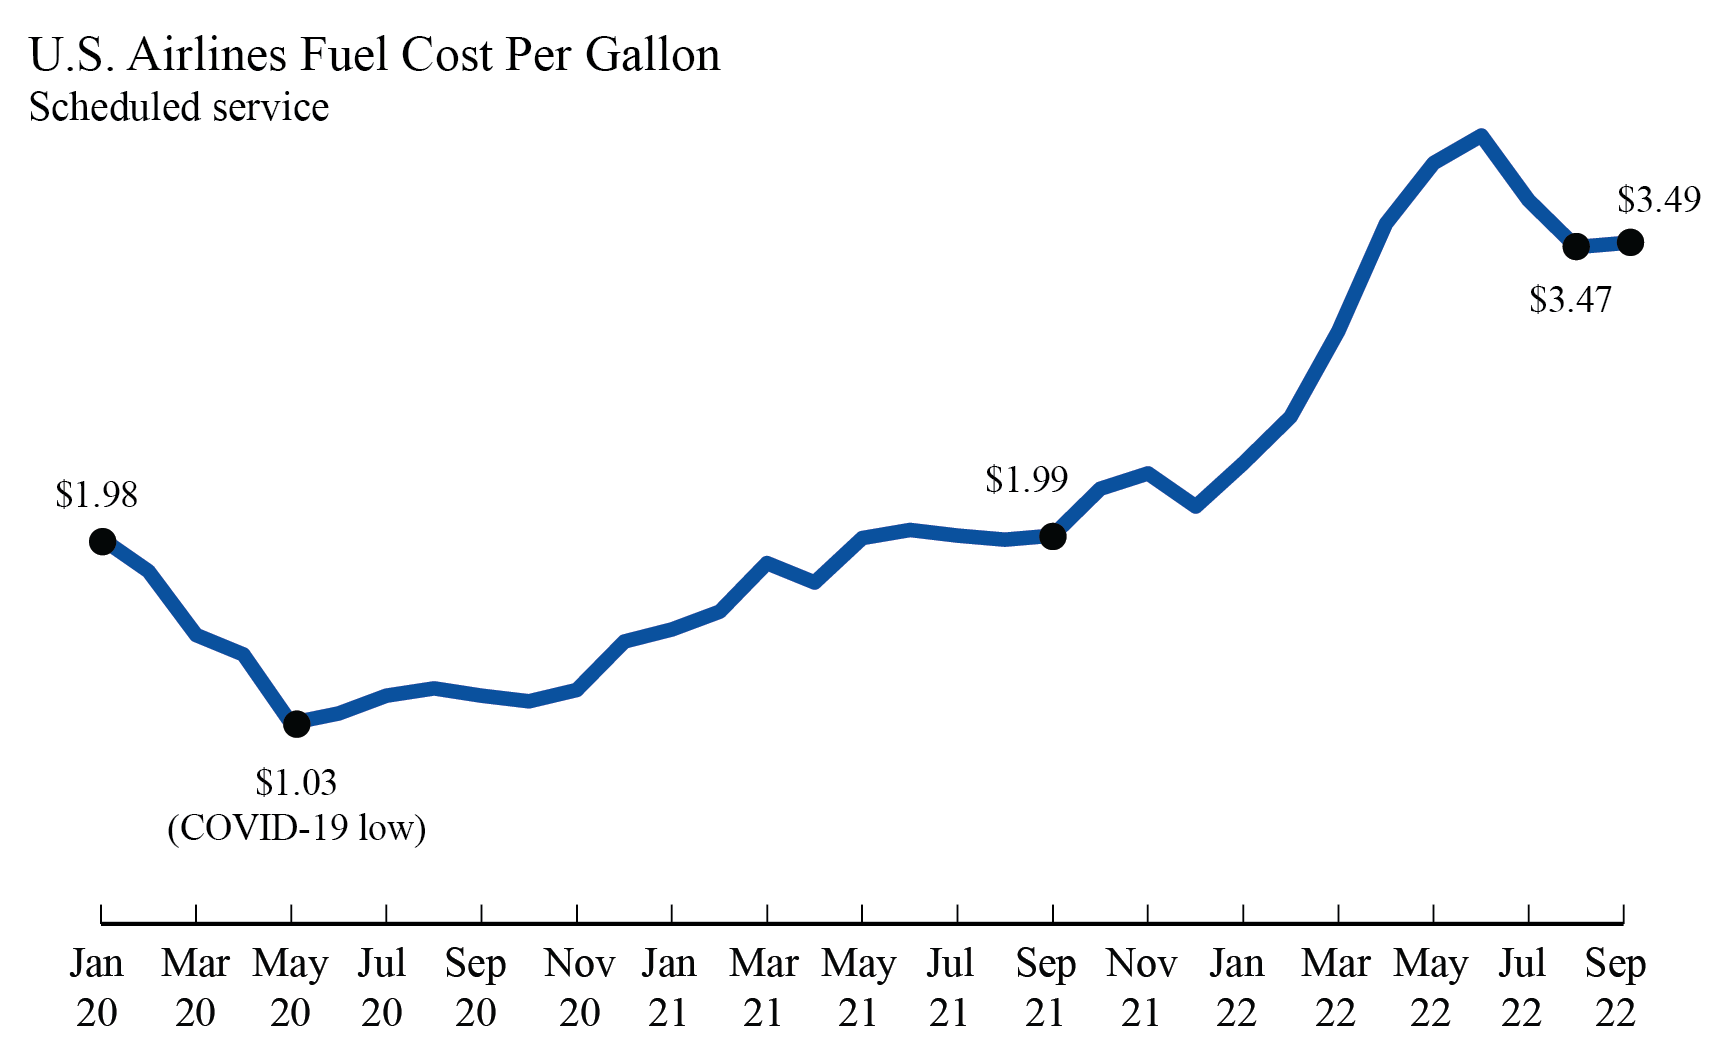 U.S. Airlines Fuel Cost Per Gallon